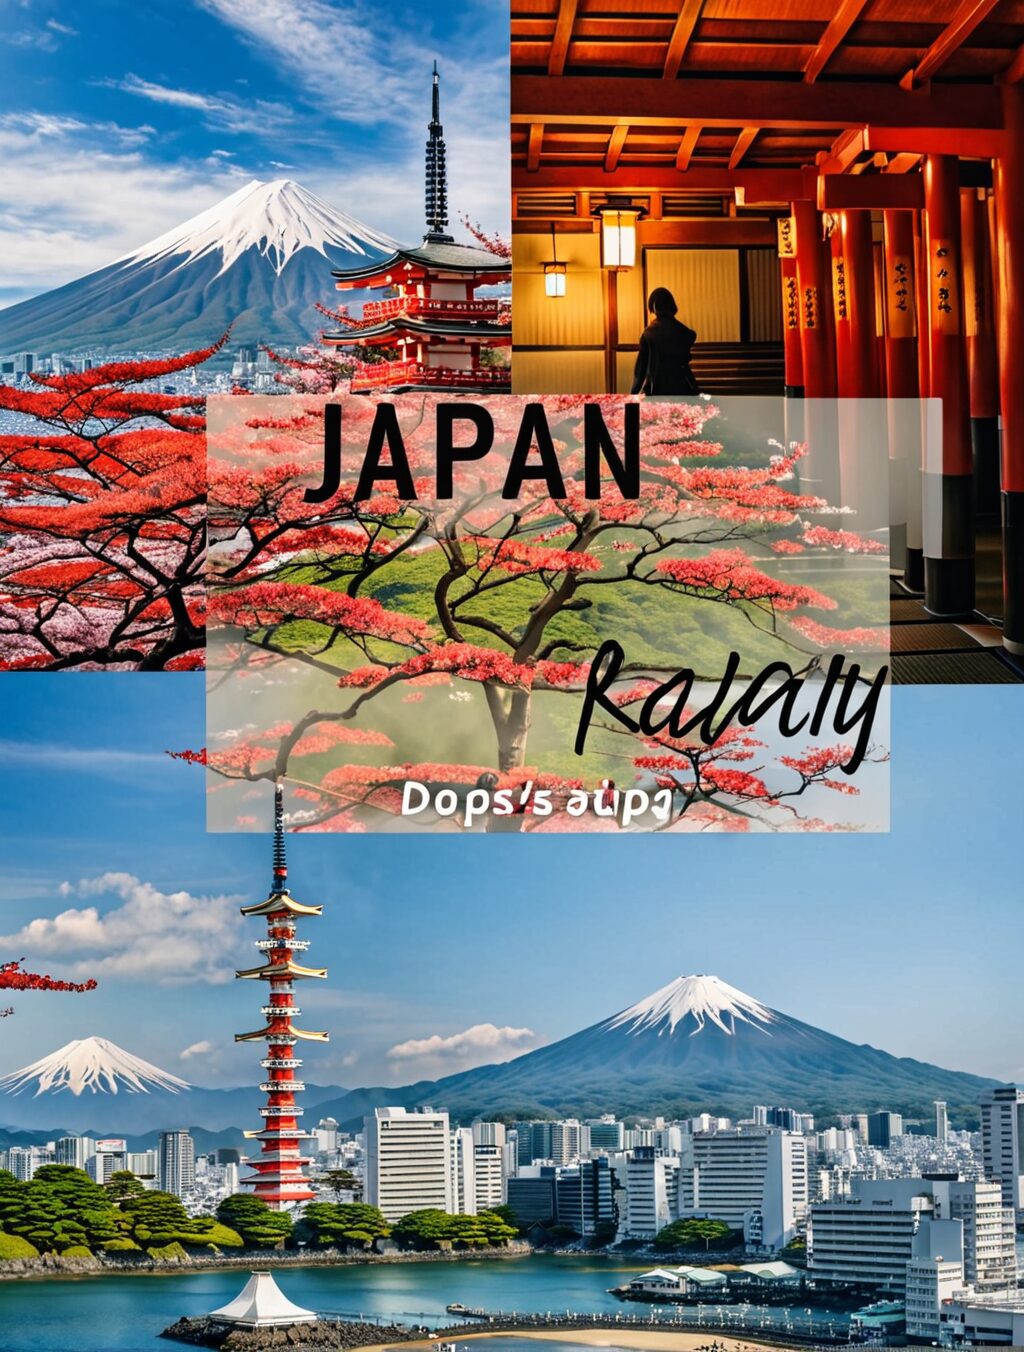 10 day japan itinerary reddit